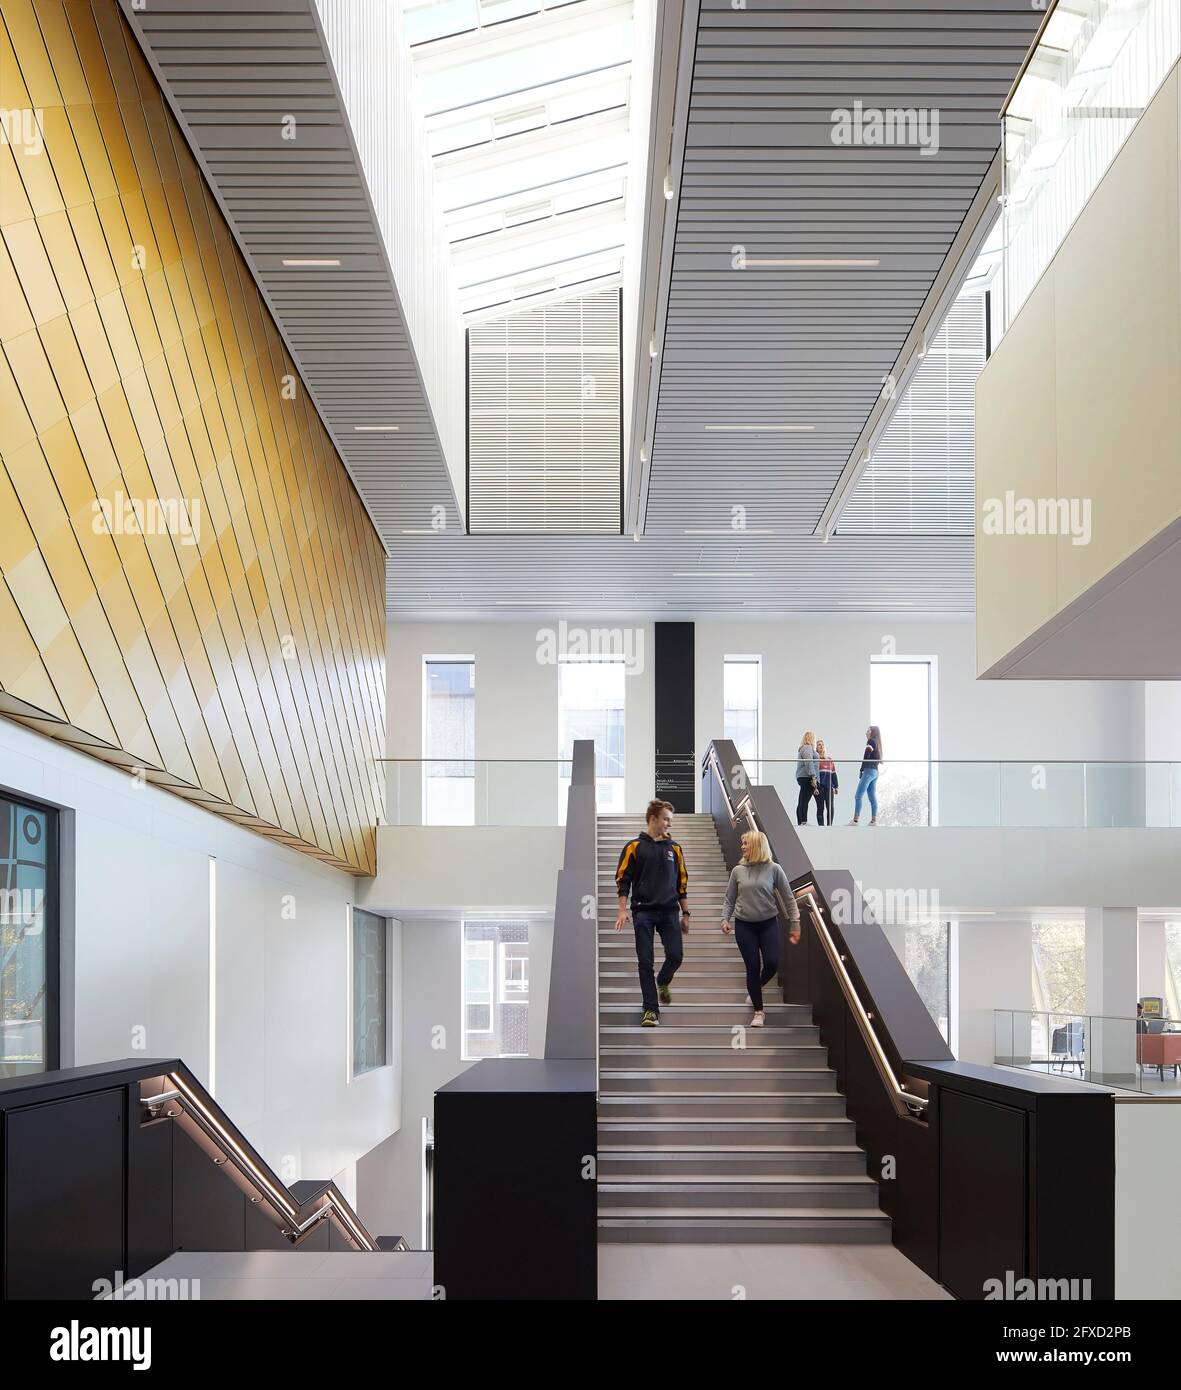 Stairway beneath skylight. University of Birmingham, Collaborative Teaching Laboratory, Birmingham, United Kingdom. Architect: Sheppard Robson, 2018. Stock Photo